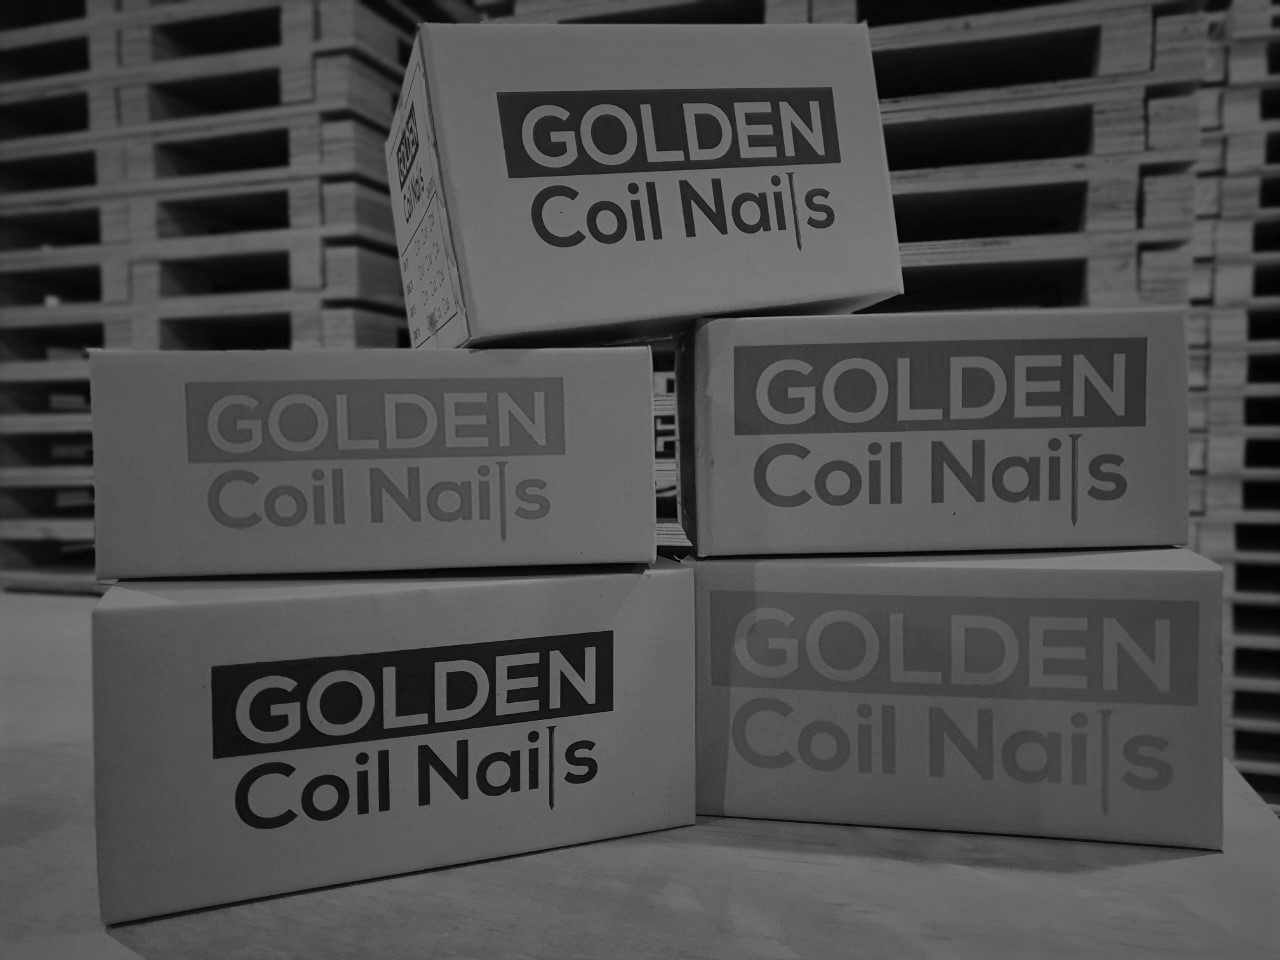 Golden coil тетрадь фото 81